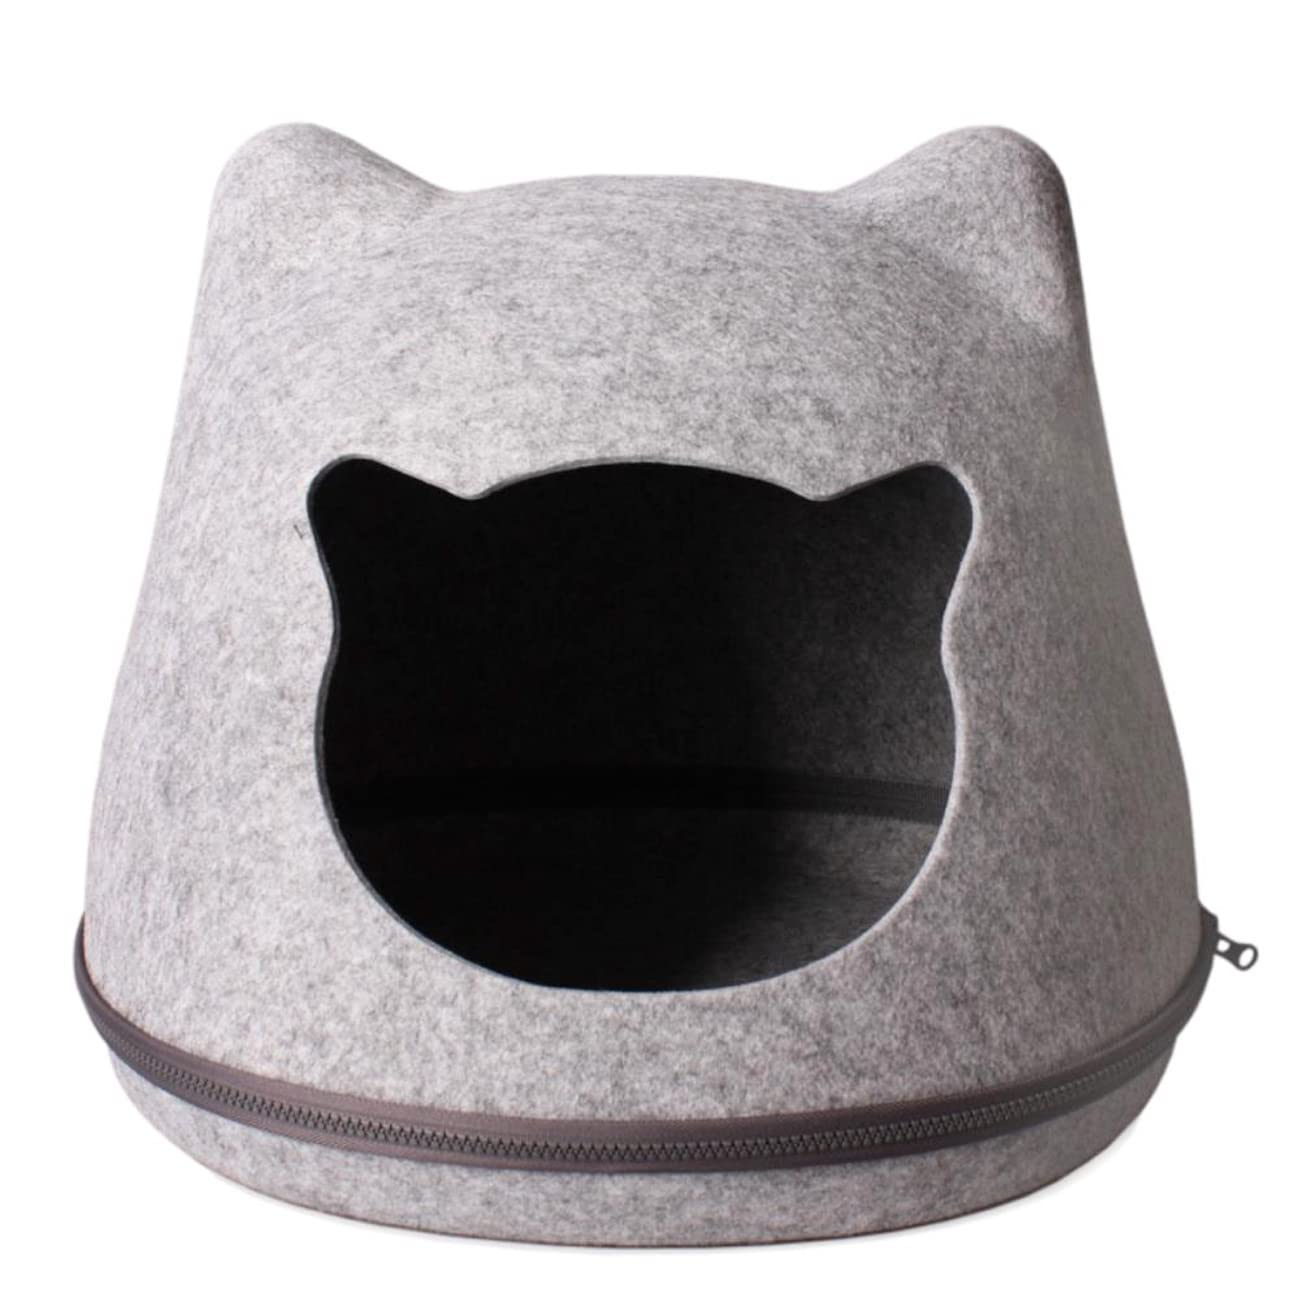 Katzenhöhle Design Katzenbett aus Filz Katzenkissen mit Zipp zum Öffnen waschbar